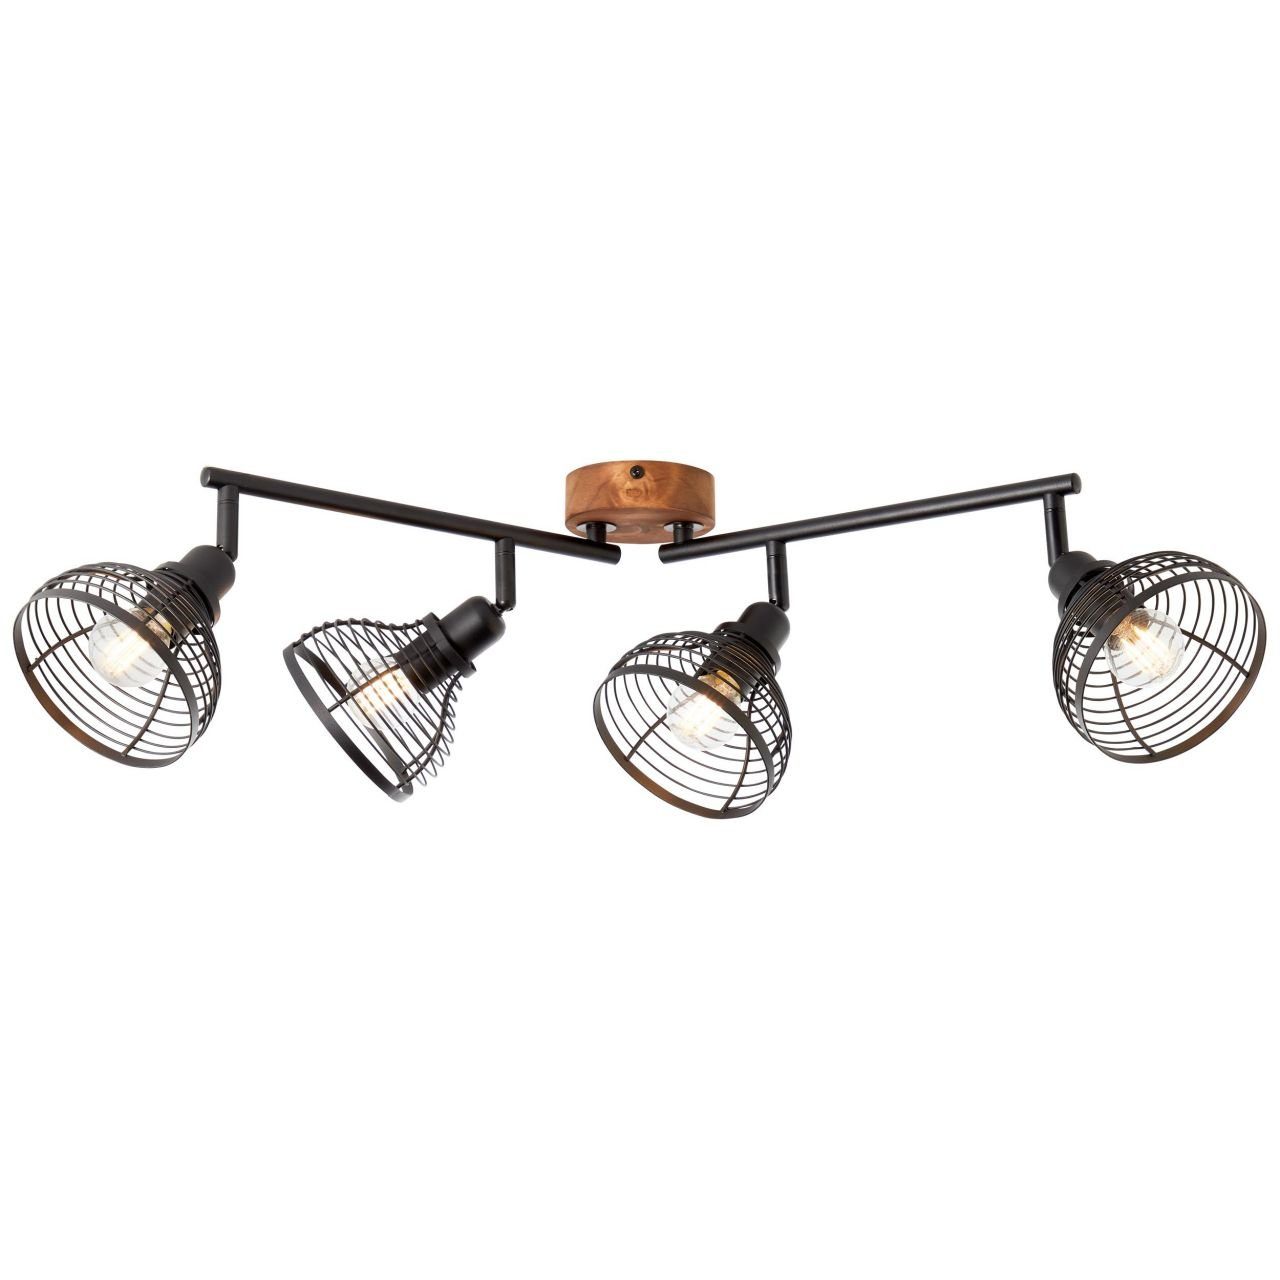 Lampe, 4flg Deckenleuchte schwarz/holzfarbend, Spotrohr Avia Metall/Holz, 4x D45, Brilliant E1 Avia,